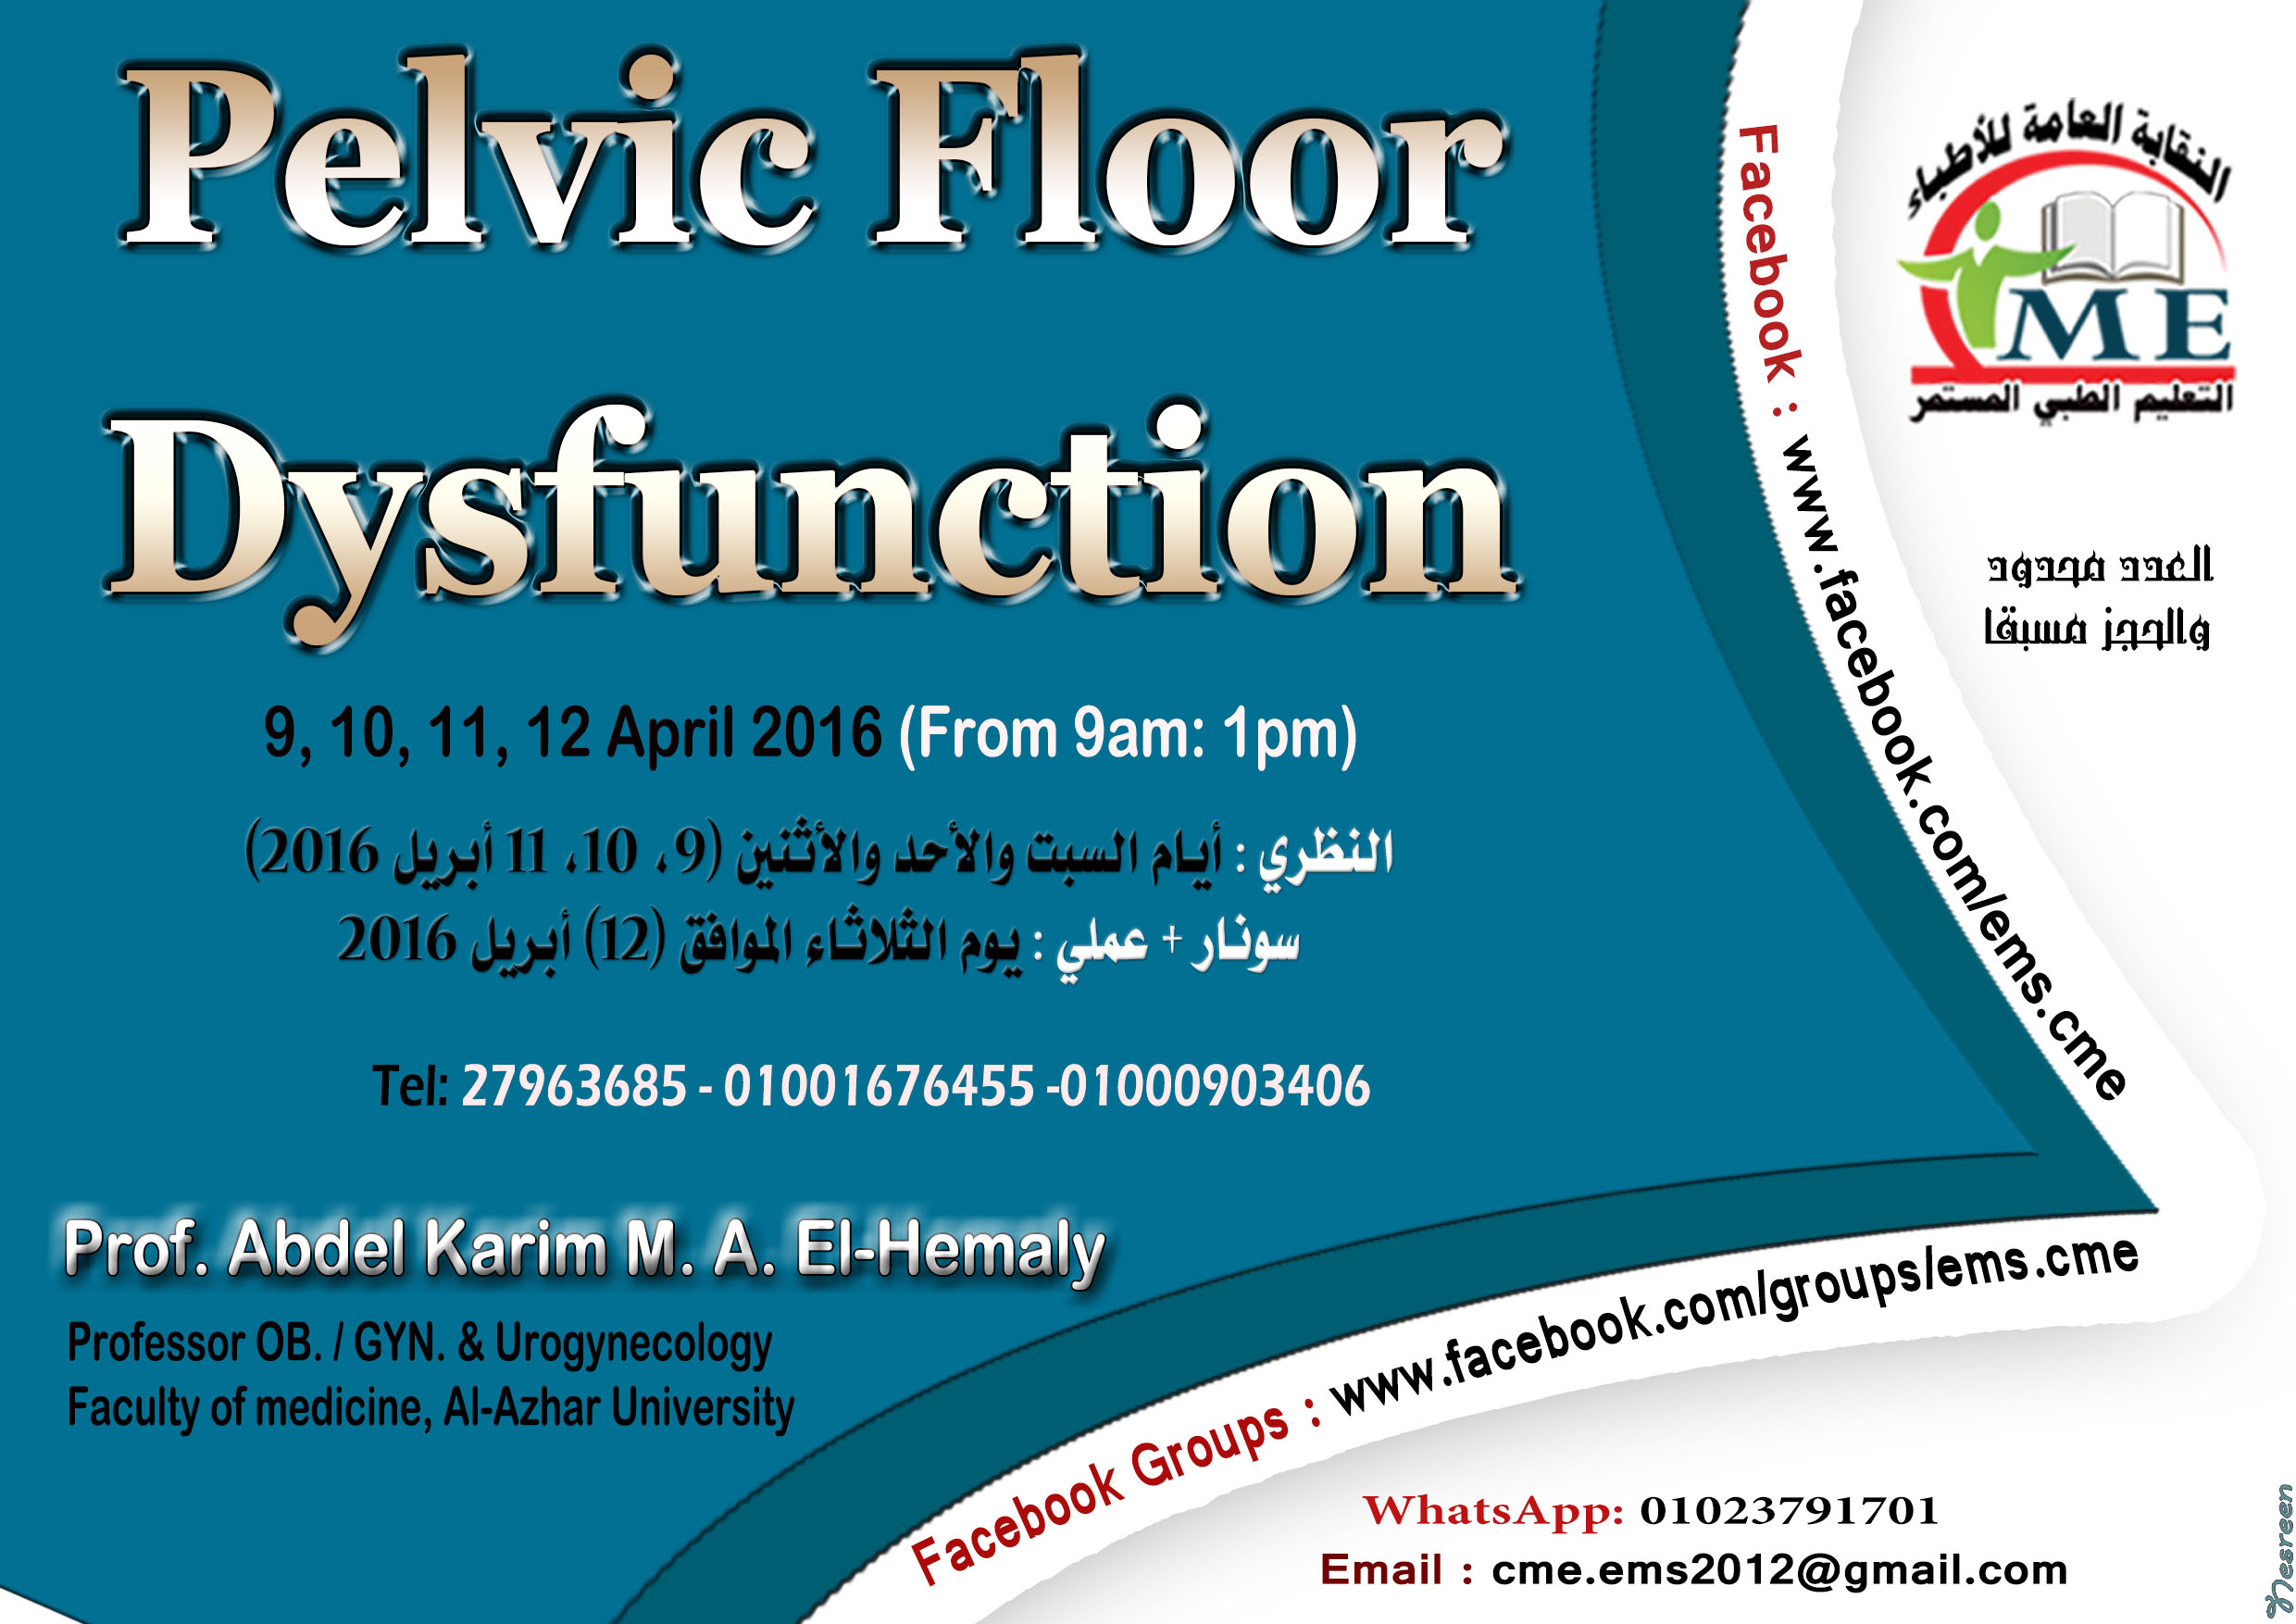 Pelvic Floor Dysfunction course